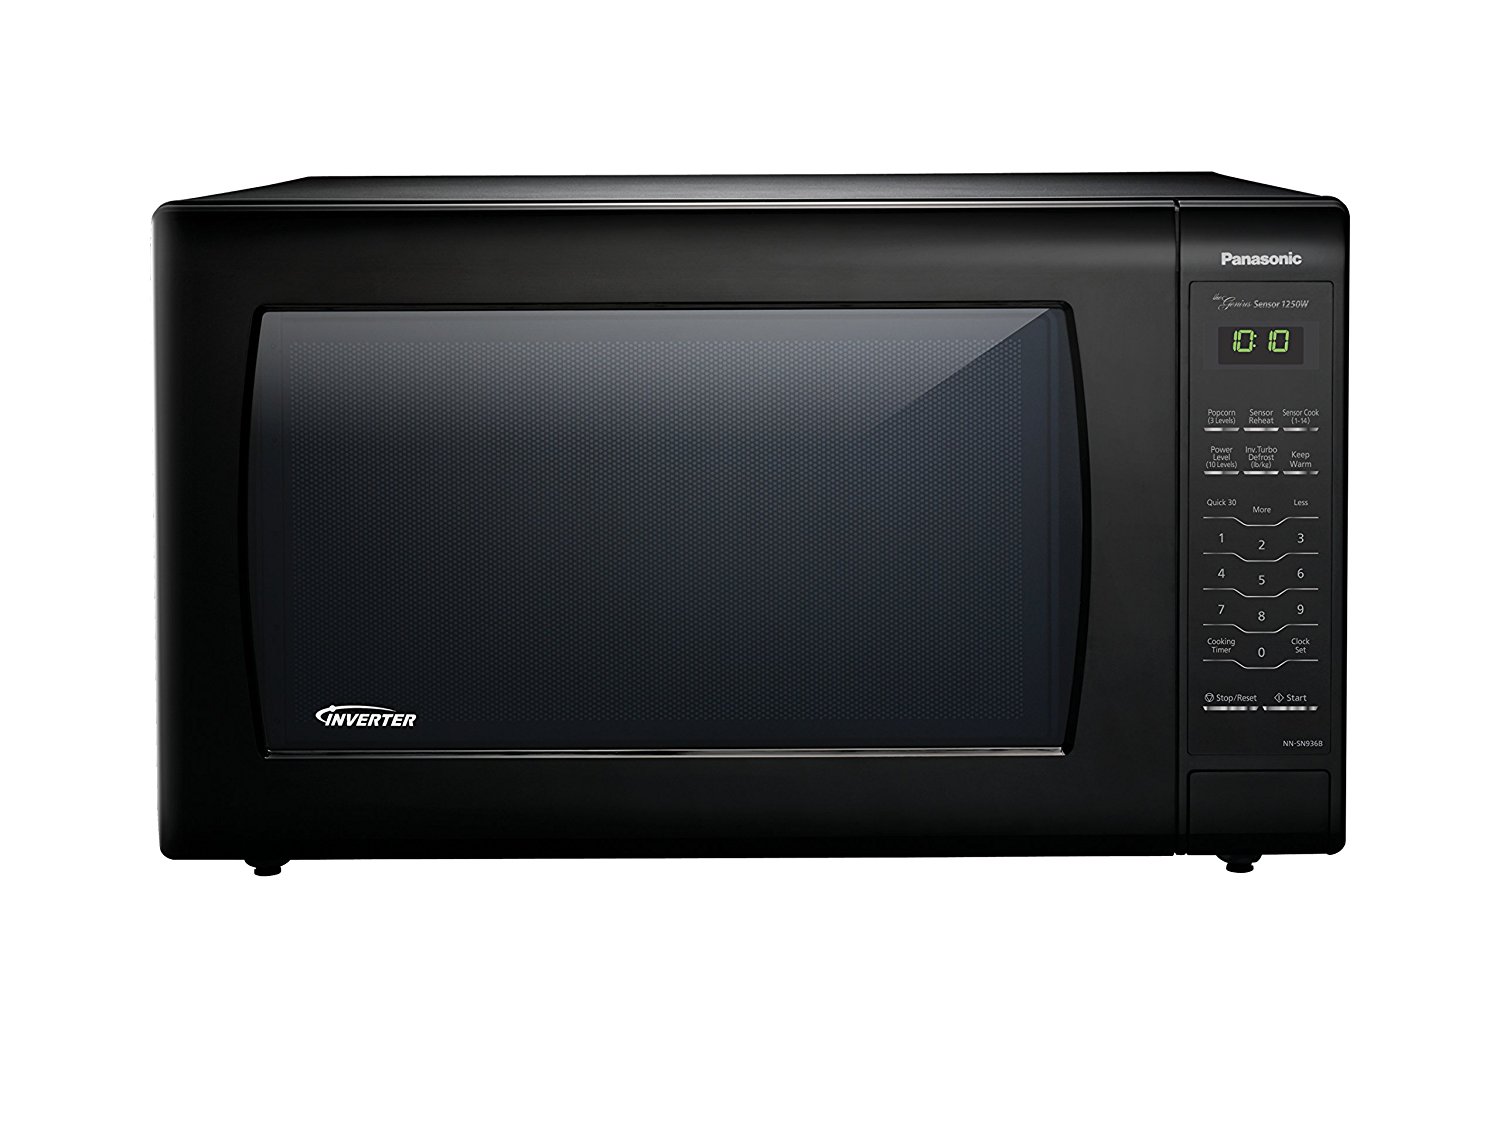 Panasonic NN-SN936B Countertop Microwave with Inverter Technology, 2.2 cu. ft. , Black